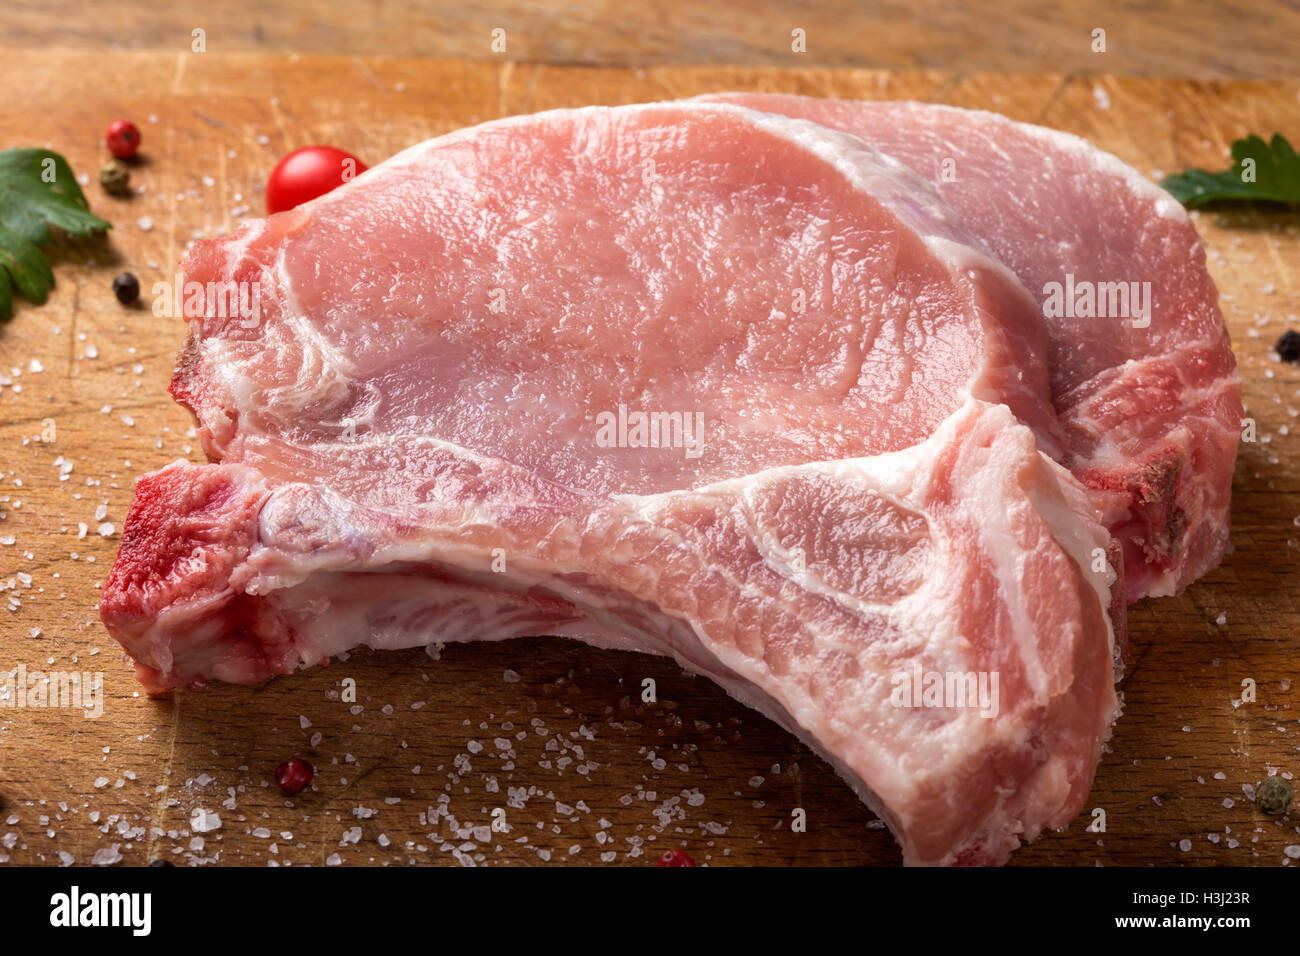 Fresh raw pork chops on a cutting board with herbs Stock Photo